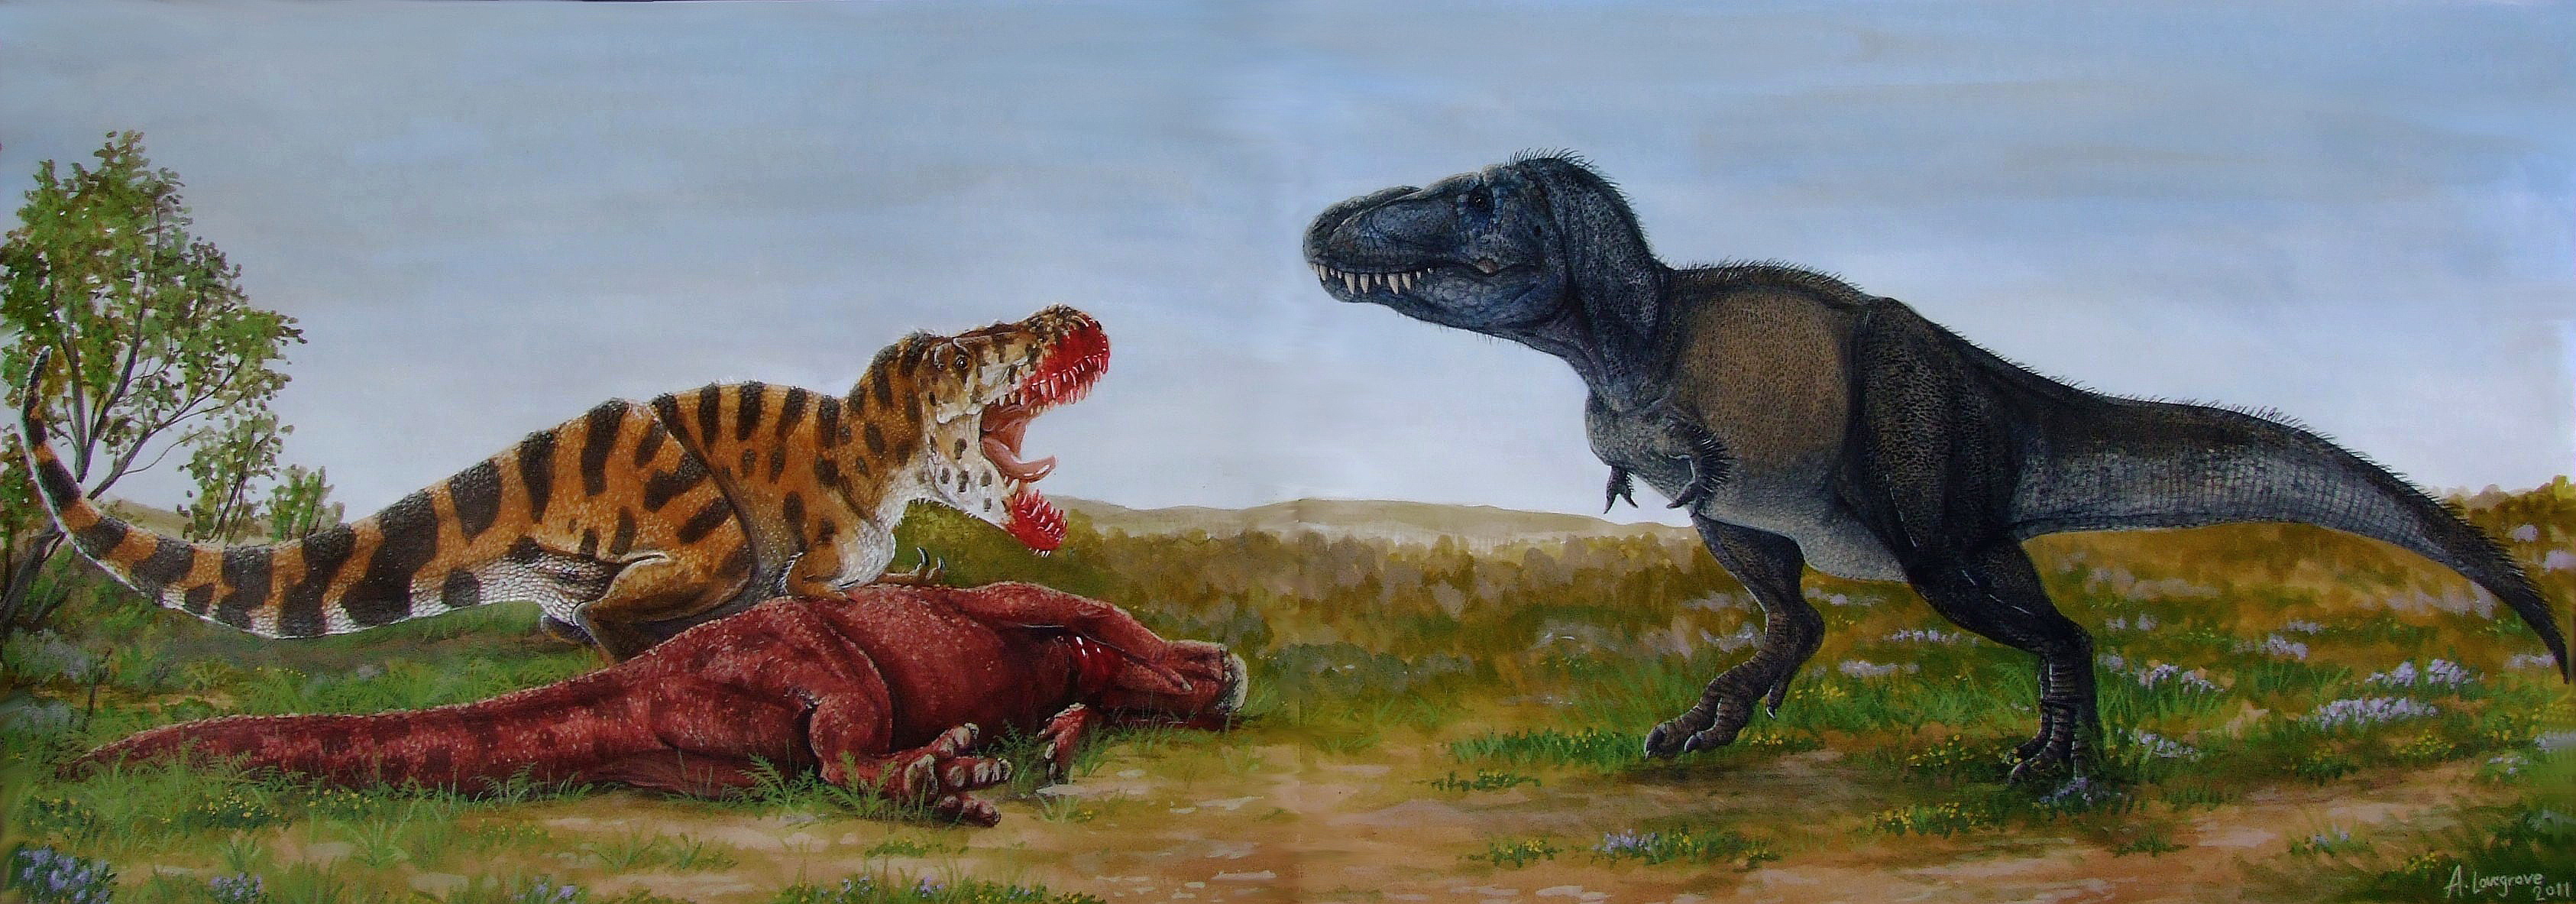 Динозавр тарбозавр. Zhuchengtyrannus динозавр. Тарбозавр. Zhuchengtyrannus Magnus. Тарбозавр и Карнотавр.